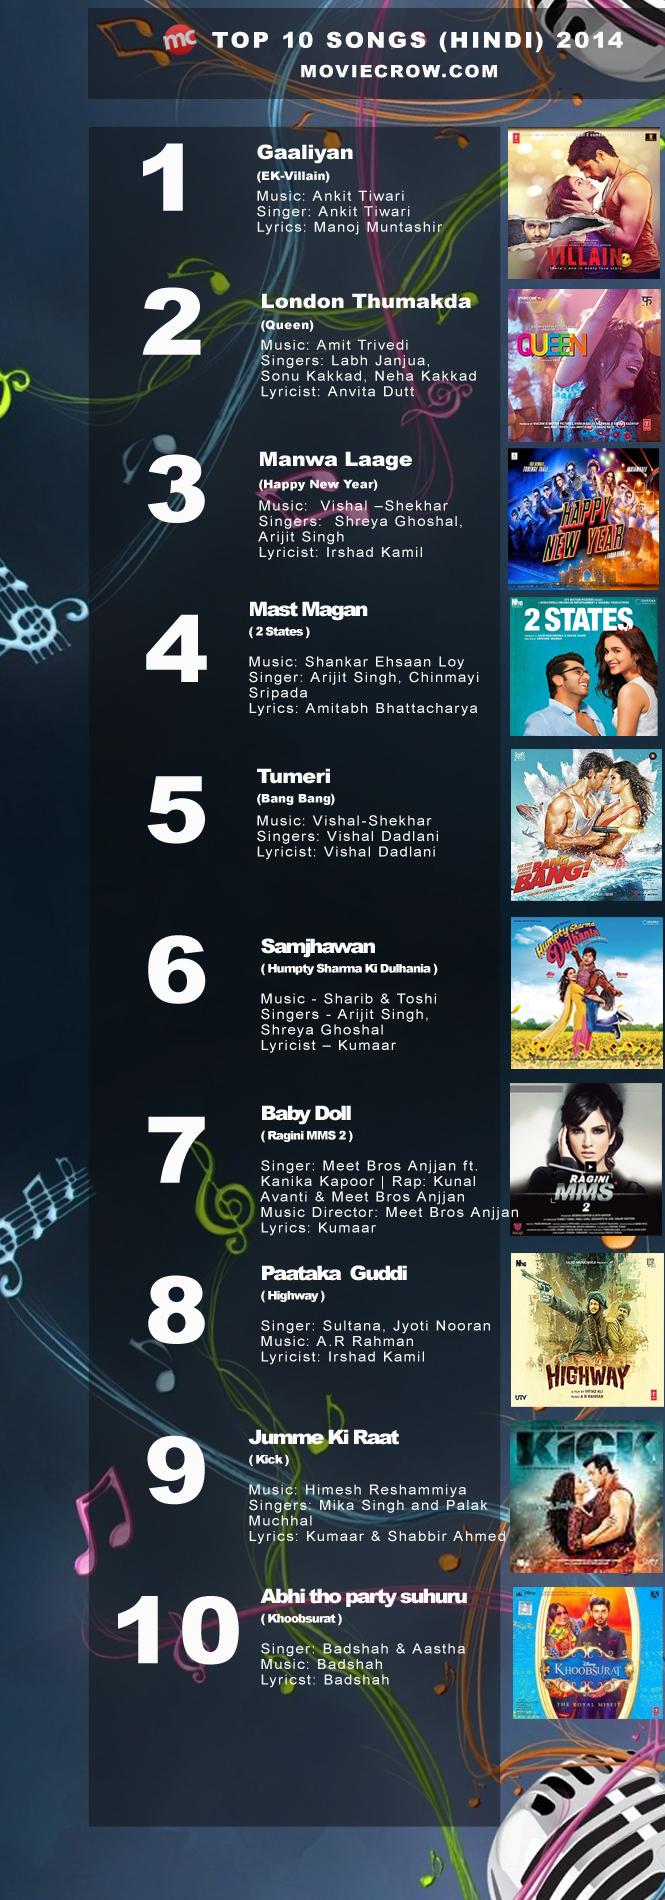 Top 10 Hindi songs of 2014